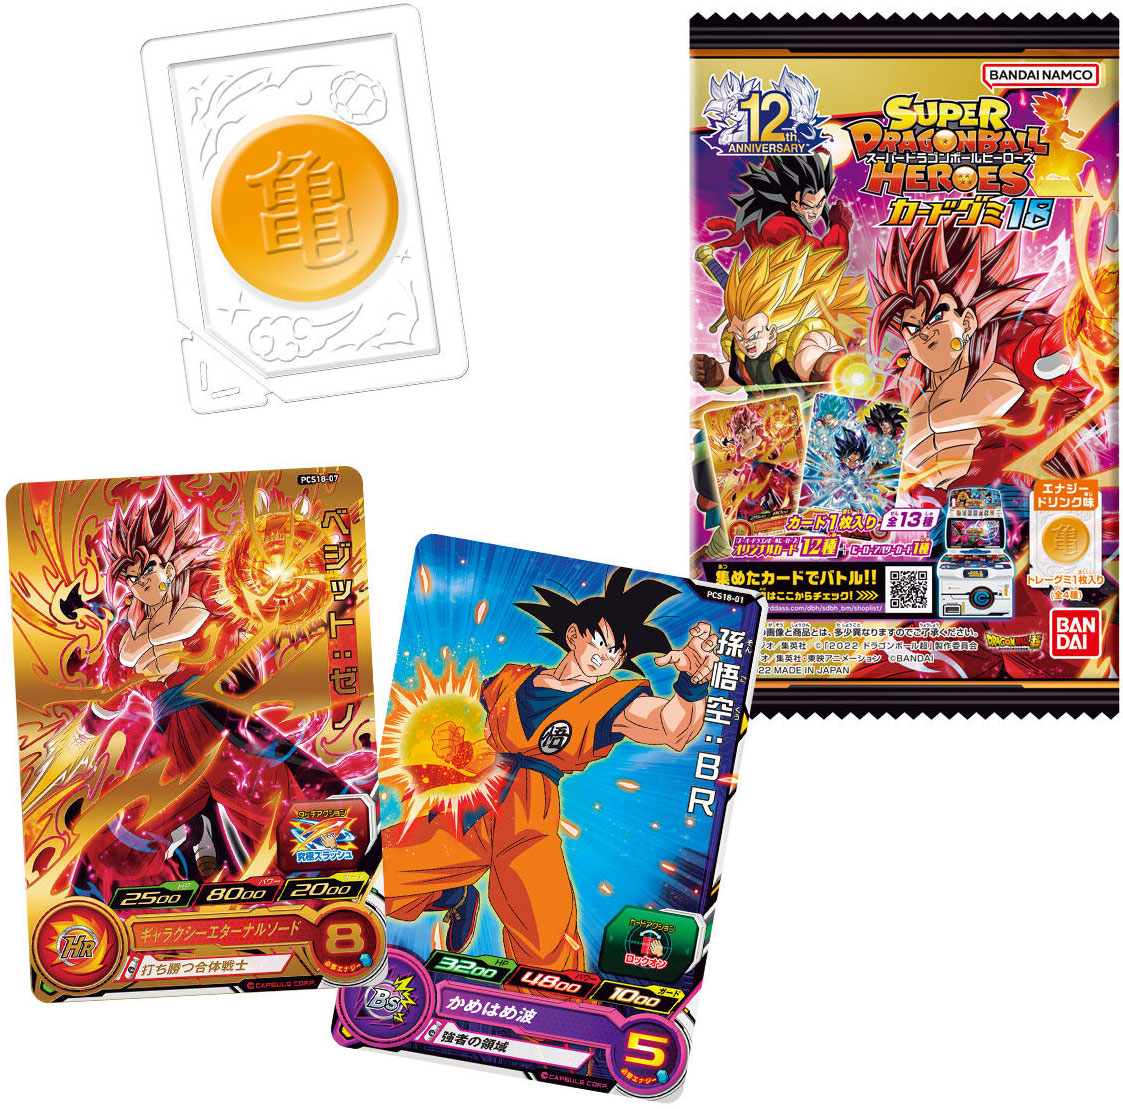 Super DRAGON BALL HEROES CARD GUMI 18 Candy Toy BANDAI